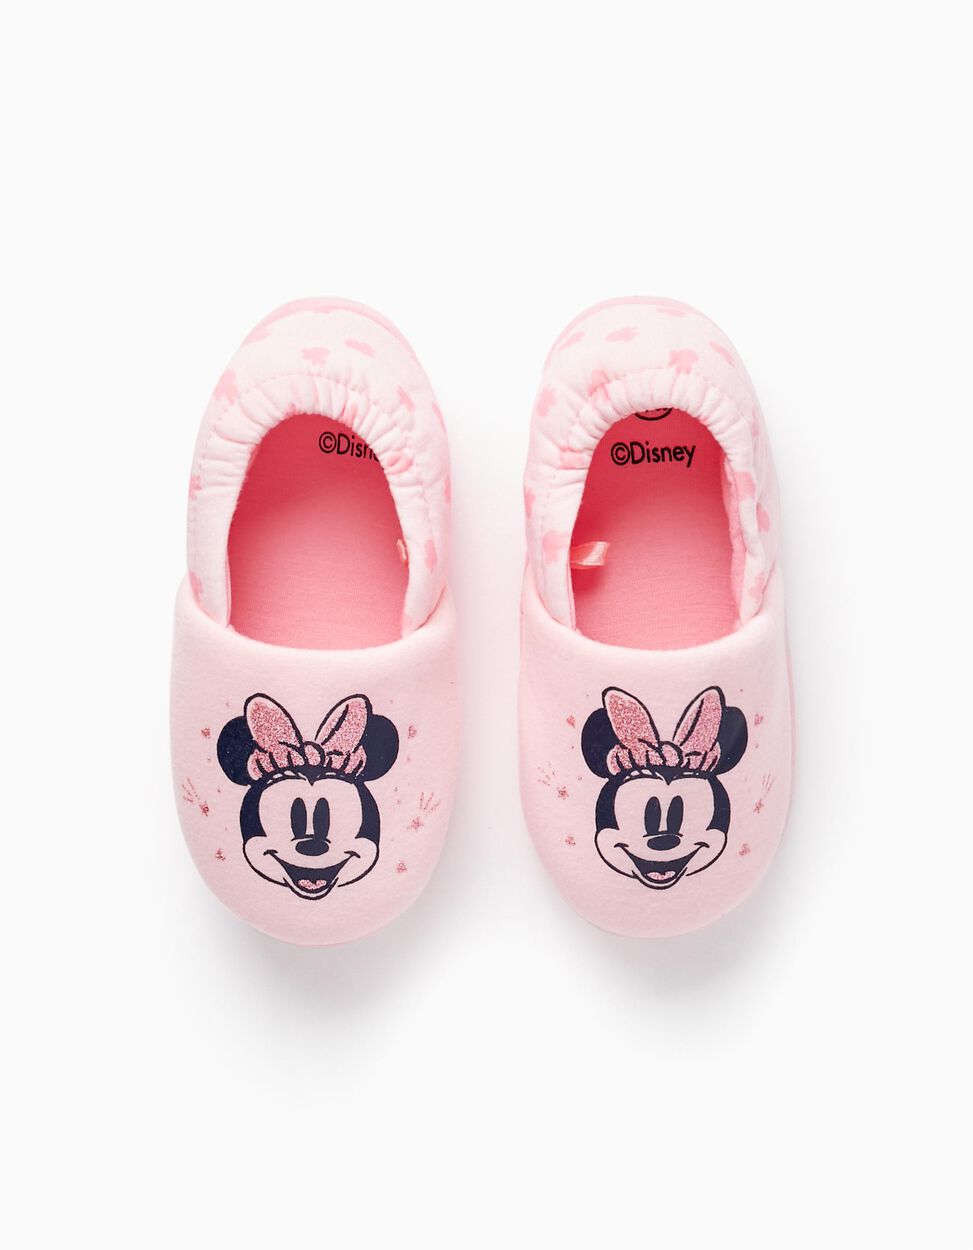 Chaussons bébé fille Minnie - Disney | Beebs